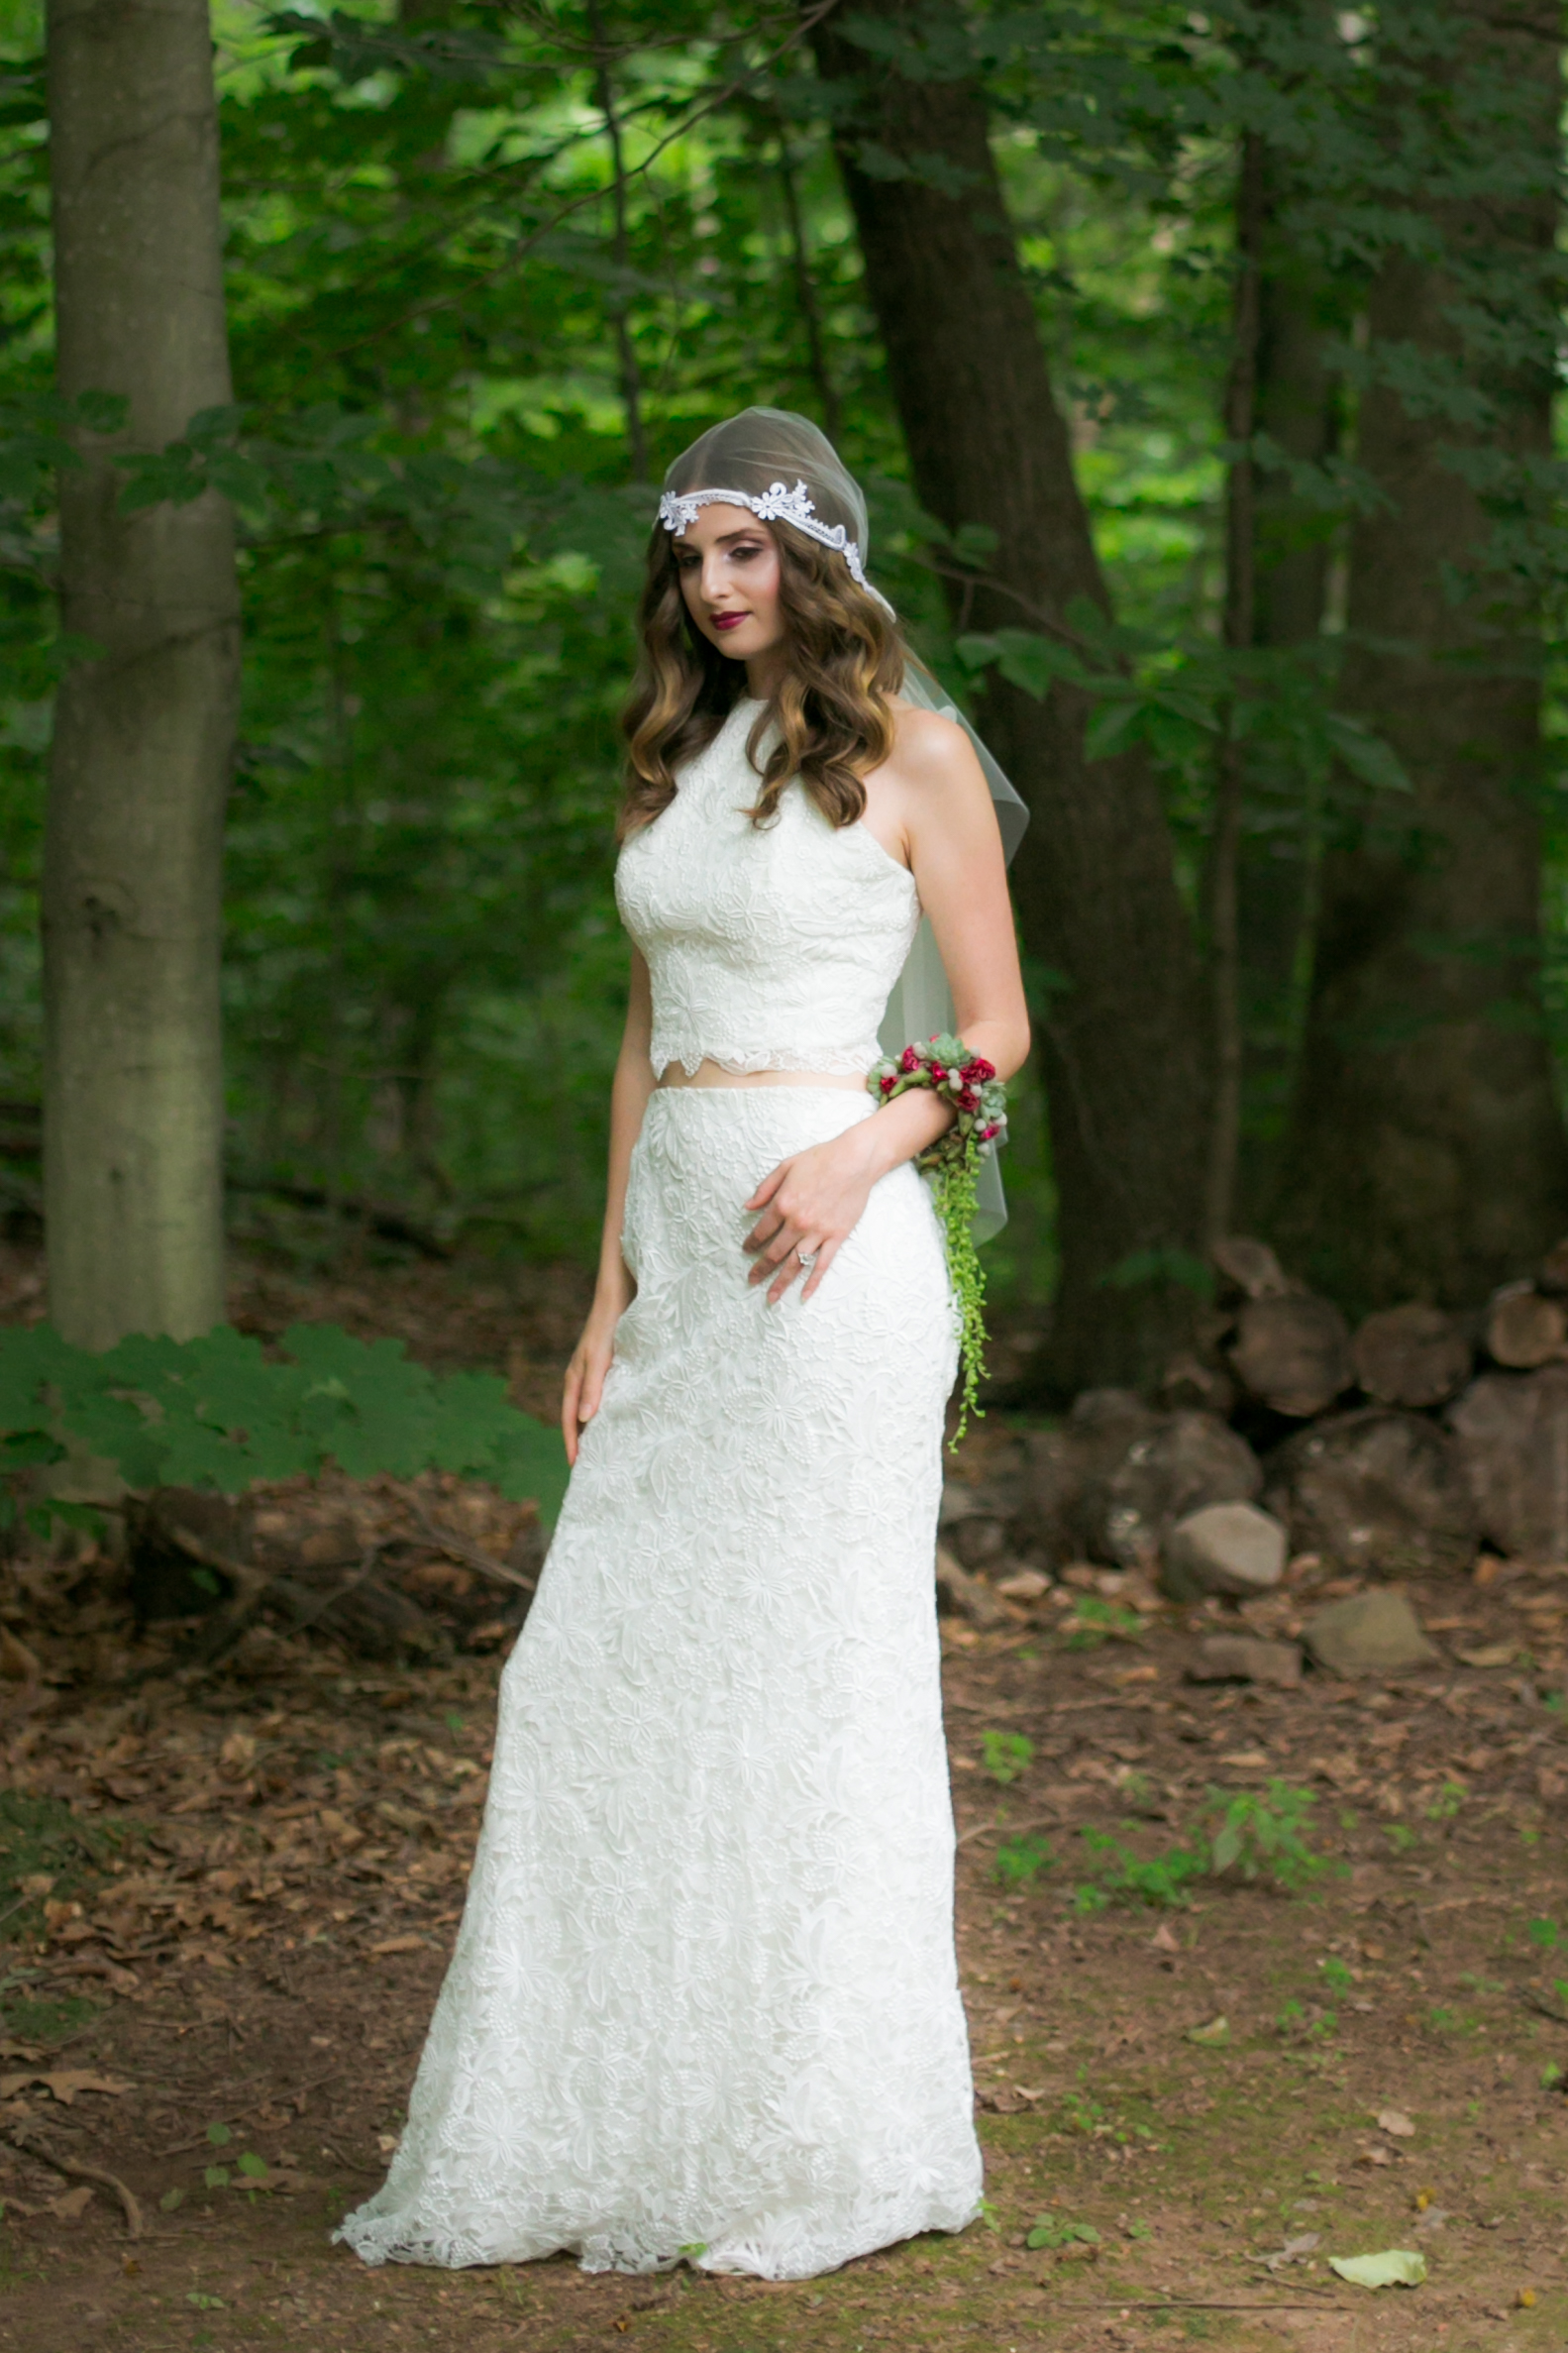 Bridal Separates - 2 Piece Lace Wedding Dress - Colchester, Connecticut Wedding Photographer